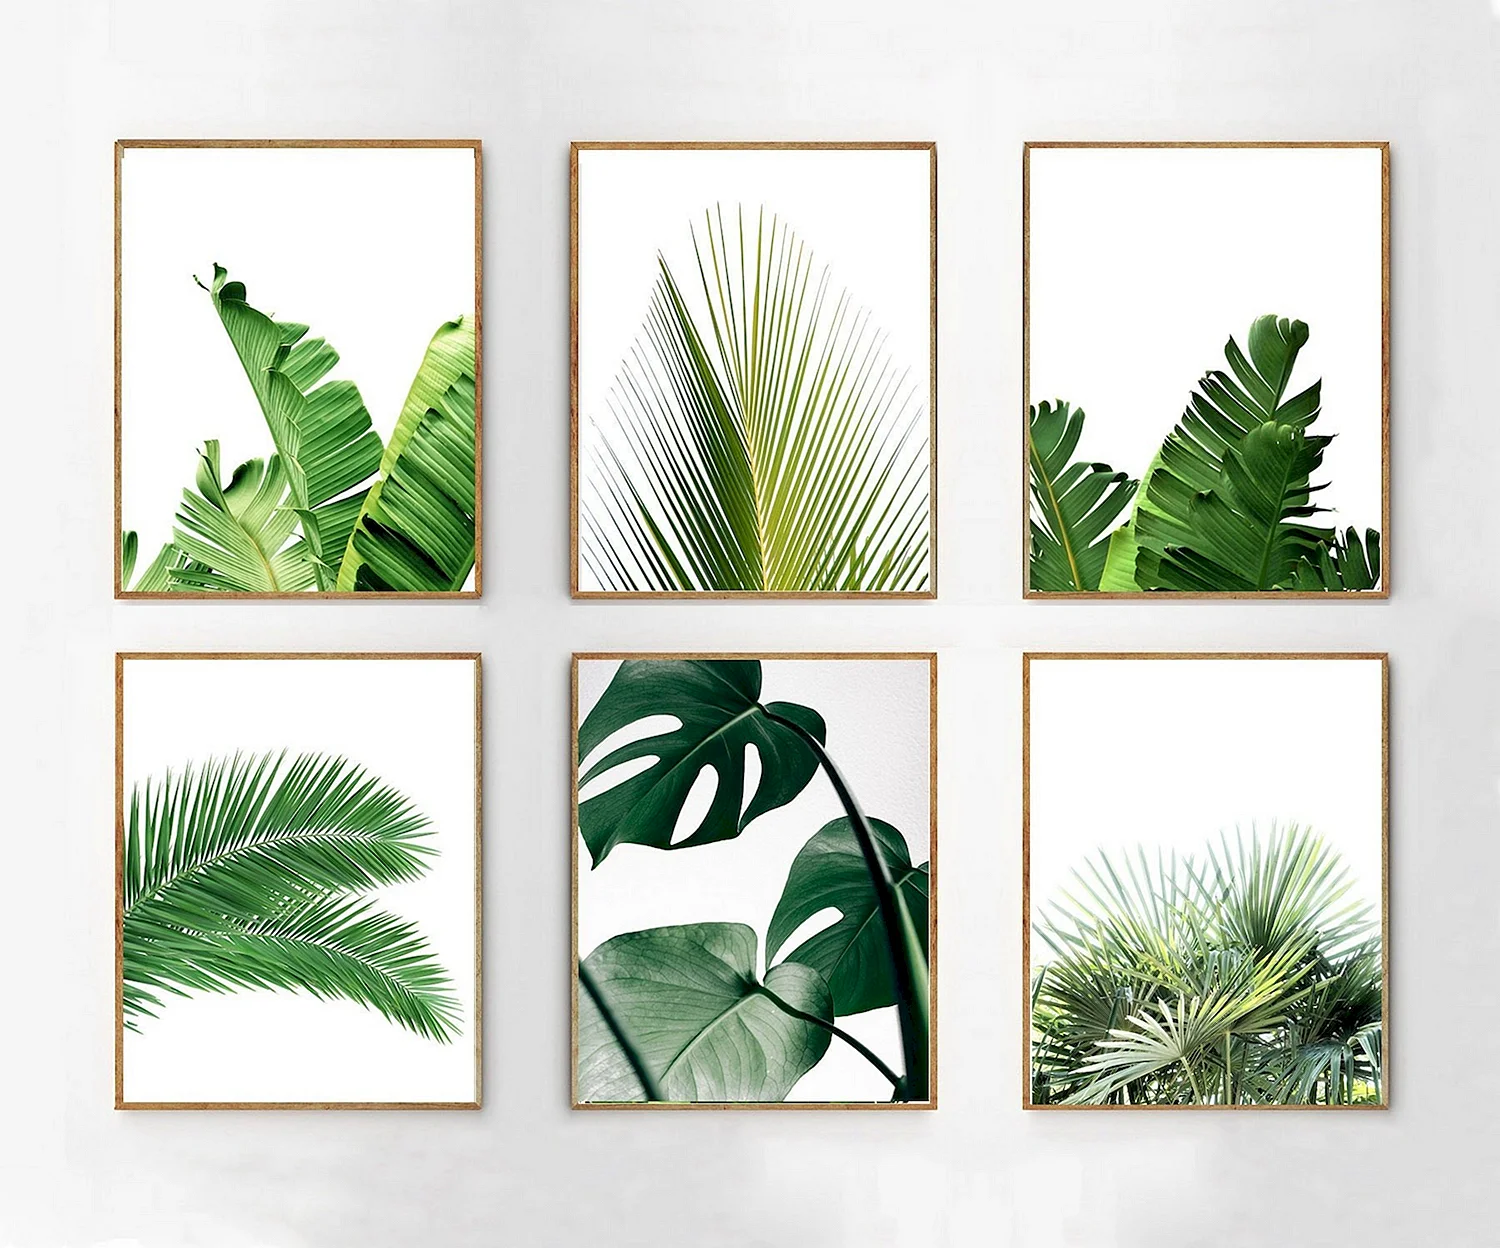 Tropical Leaf Prints, Banana, Monstera, Palm Leaf Prints, abstract Tropical leaves, Botanical Decor картины